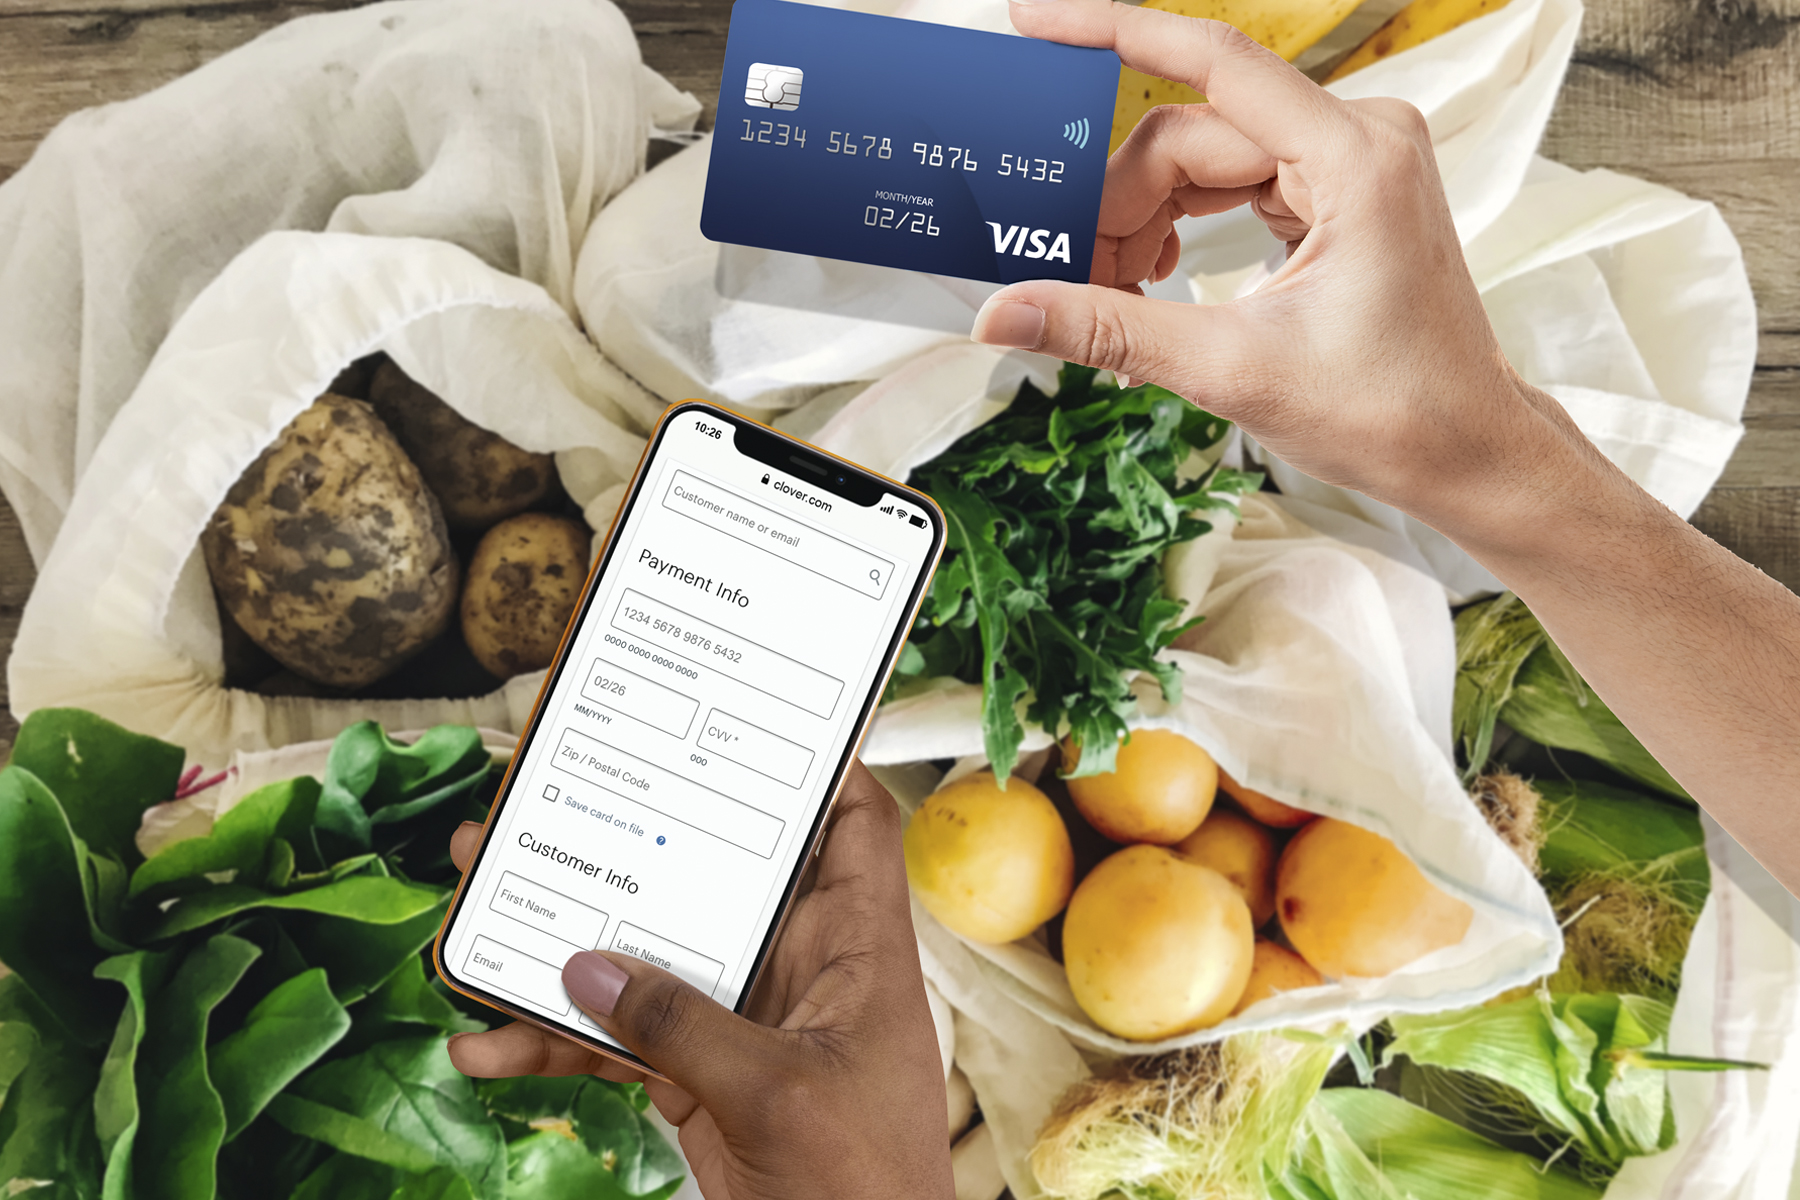 Digital payment technologies